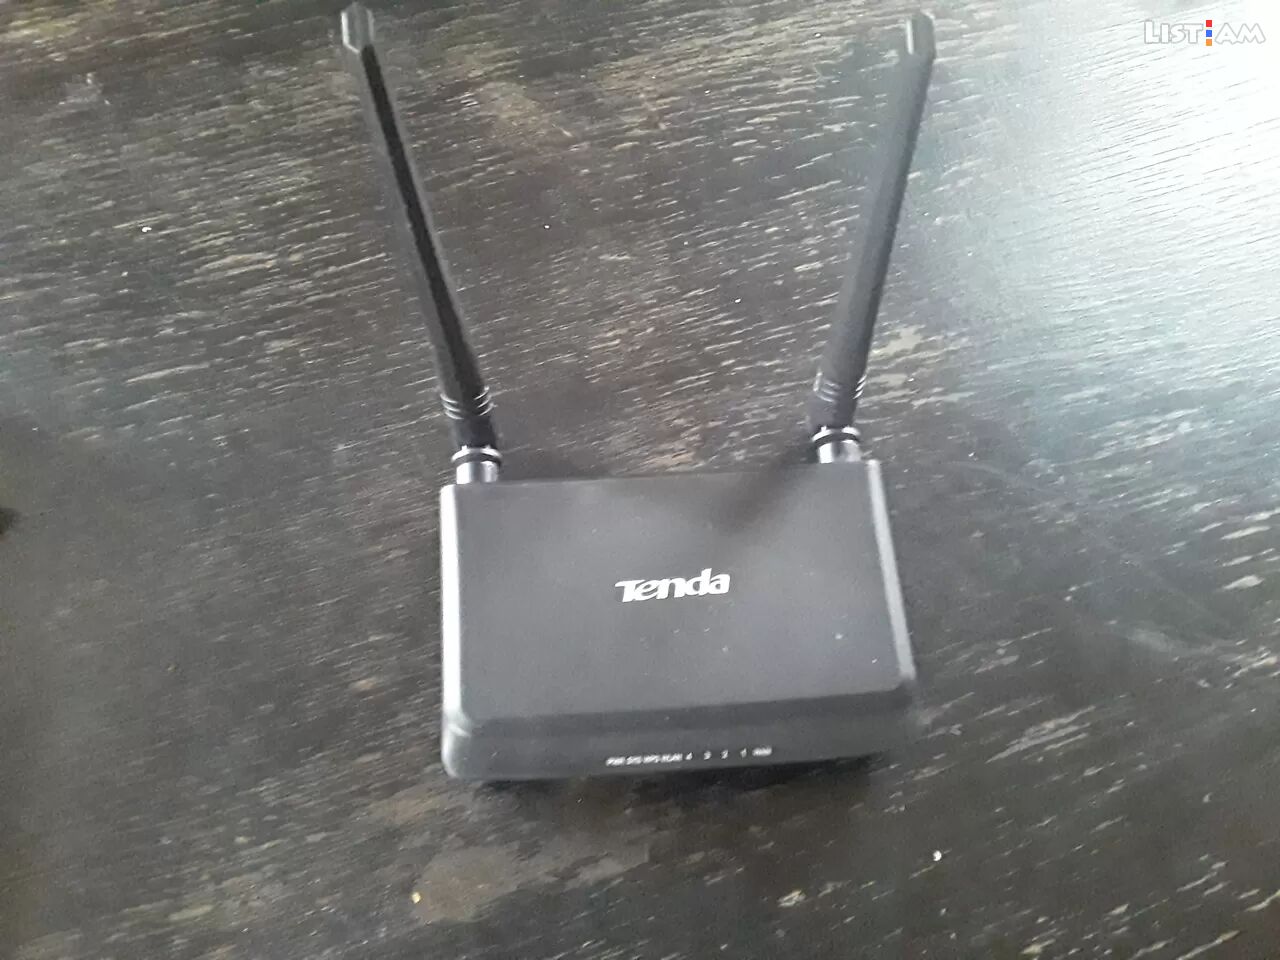 Wi-fi router model N